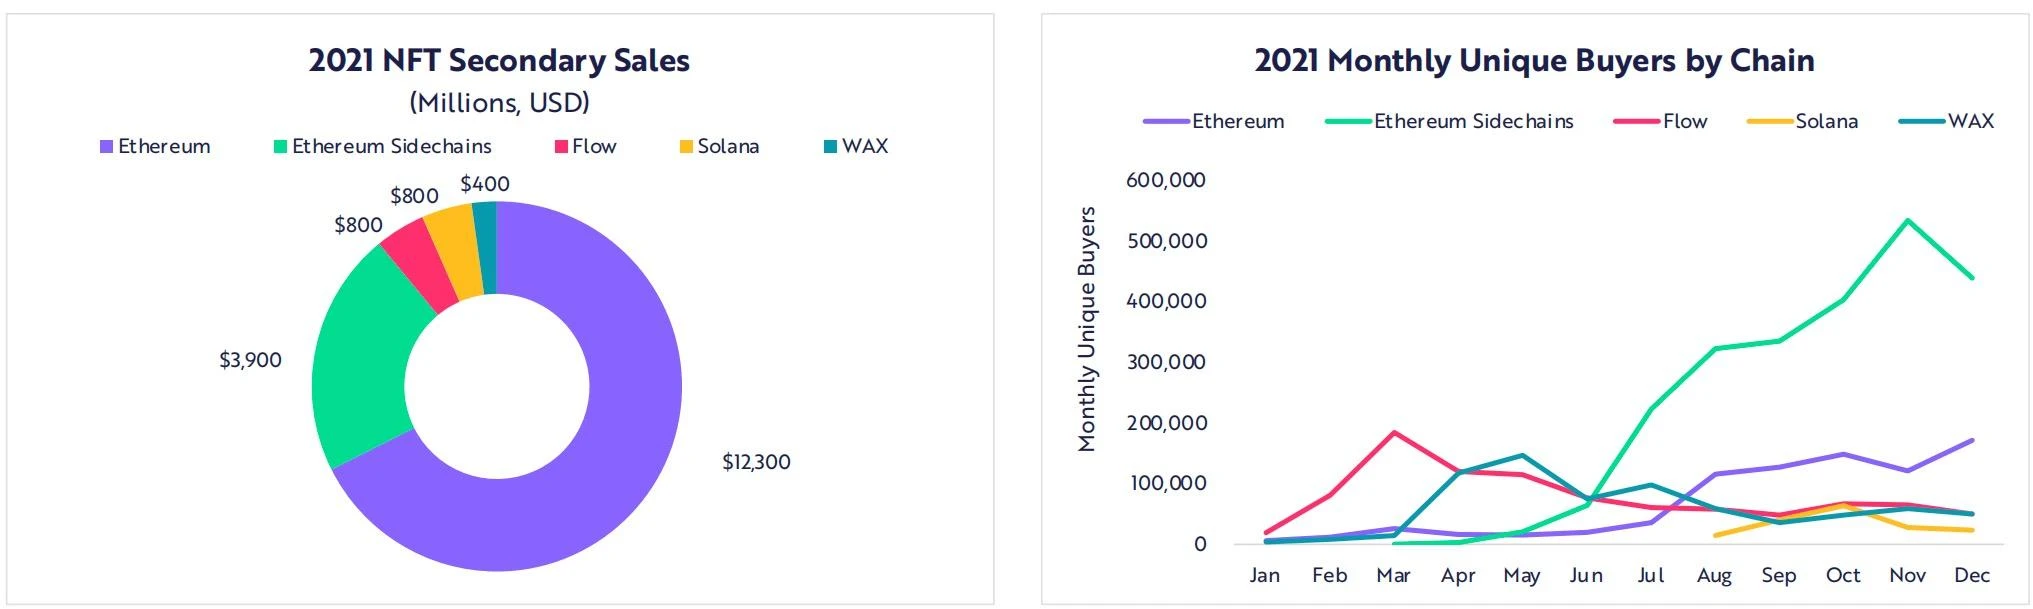 ARK Investment年度报告节选：比特币、以太坊和Web3的未来十年